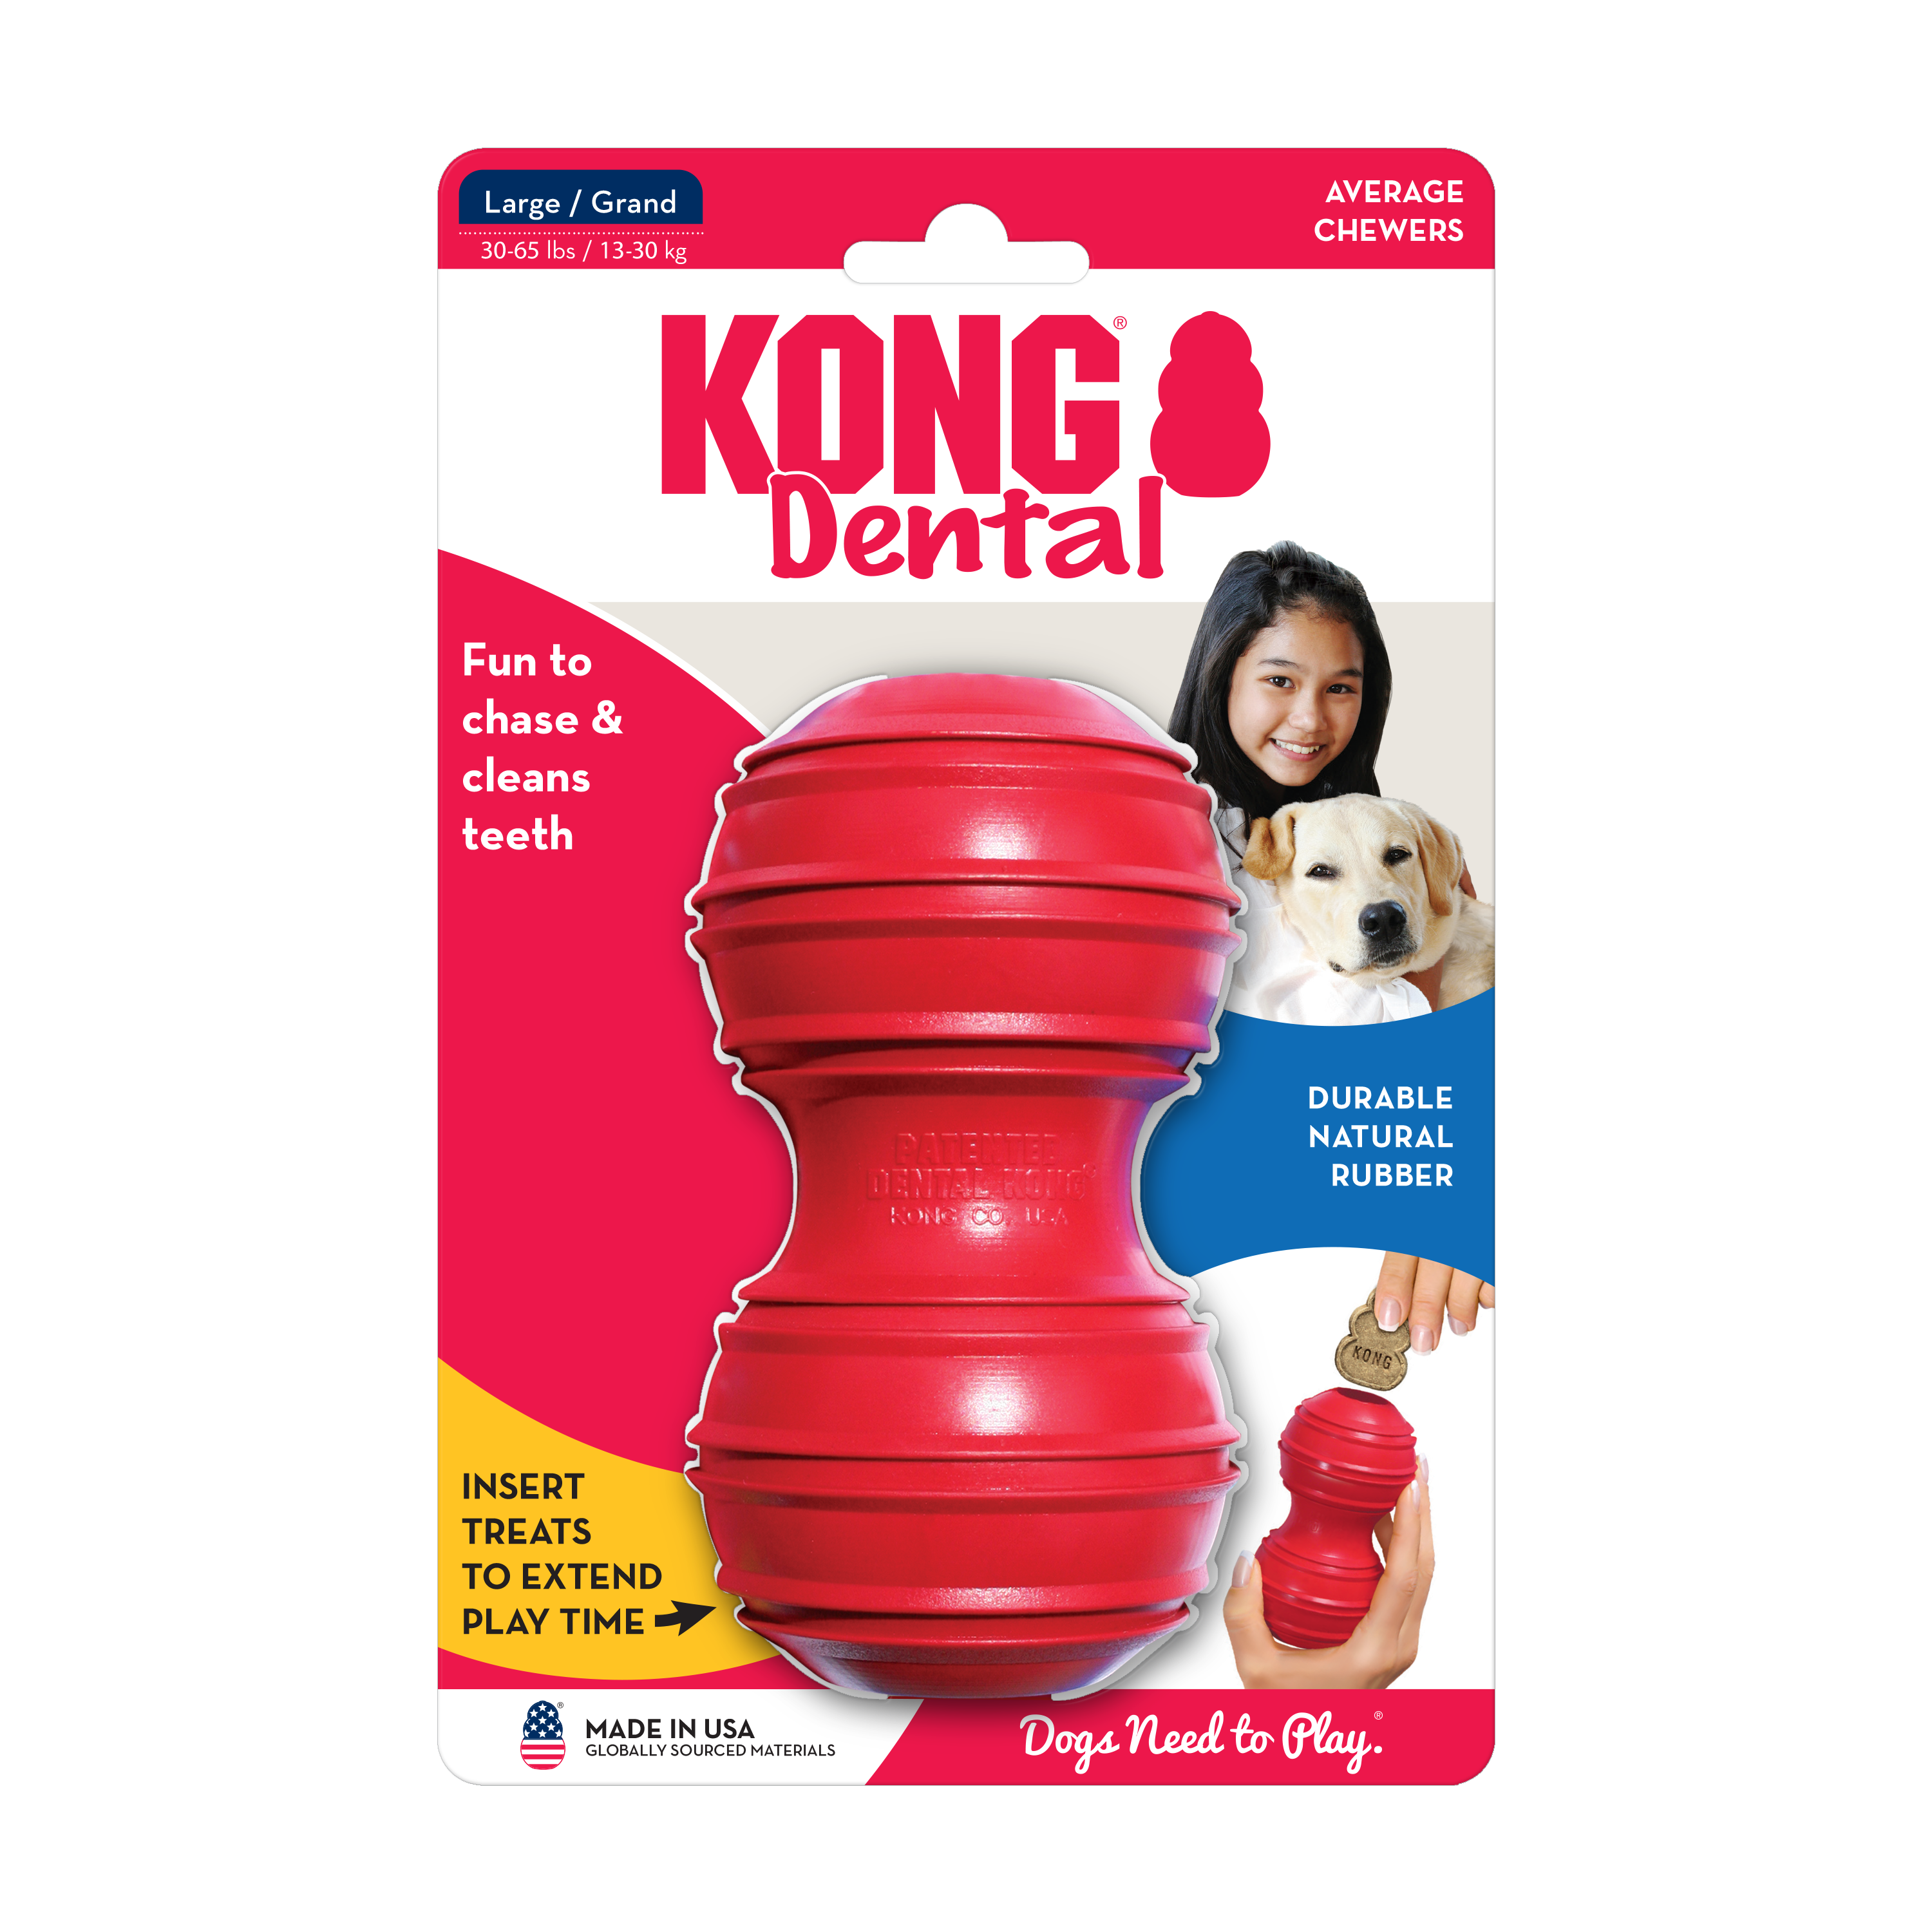 KONG Dental product image